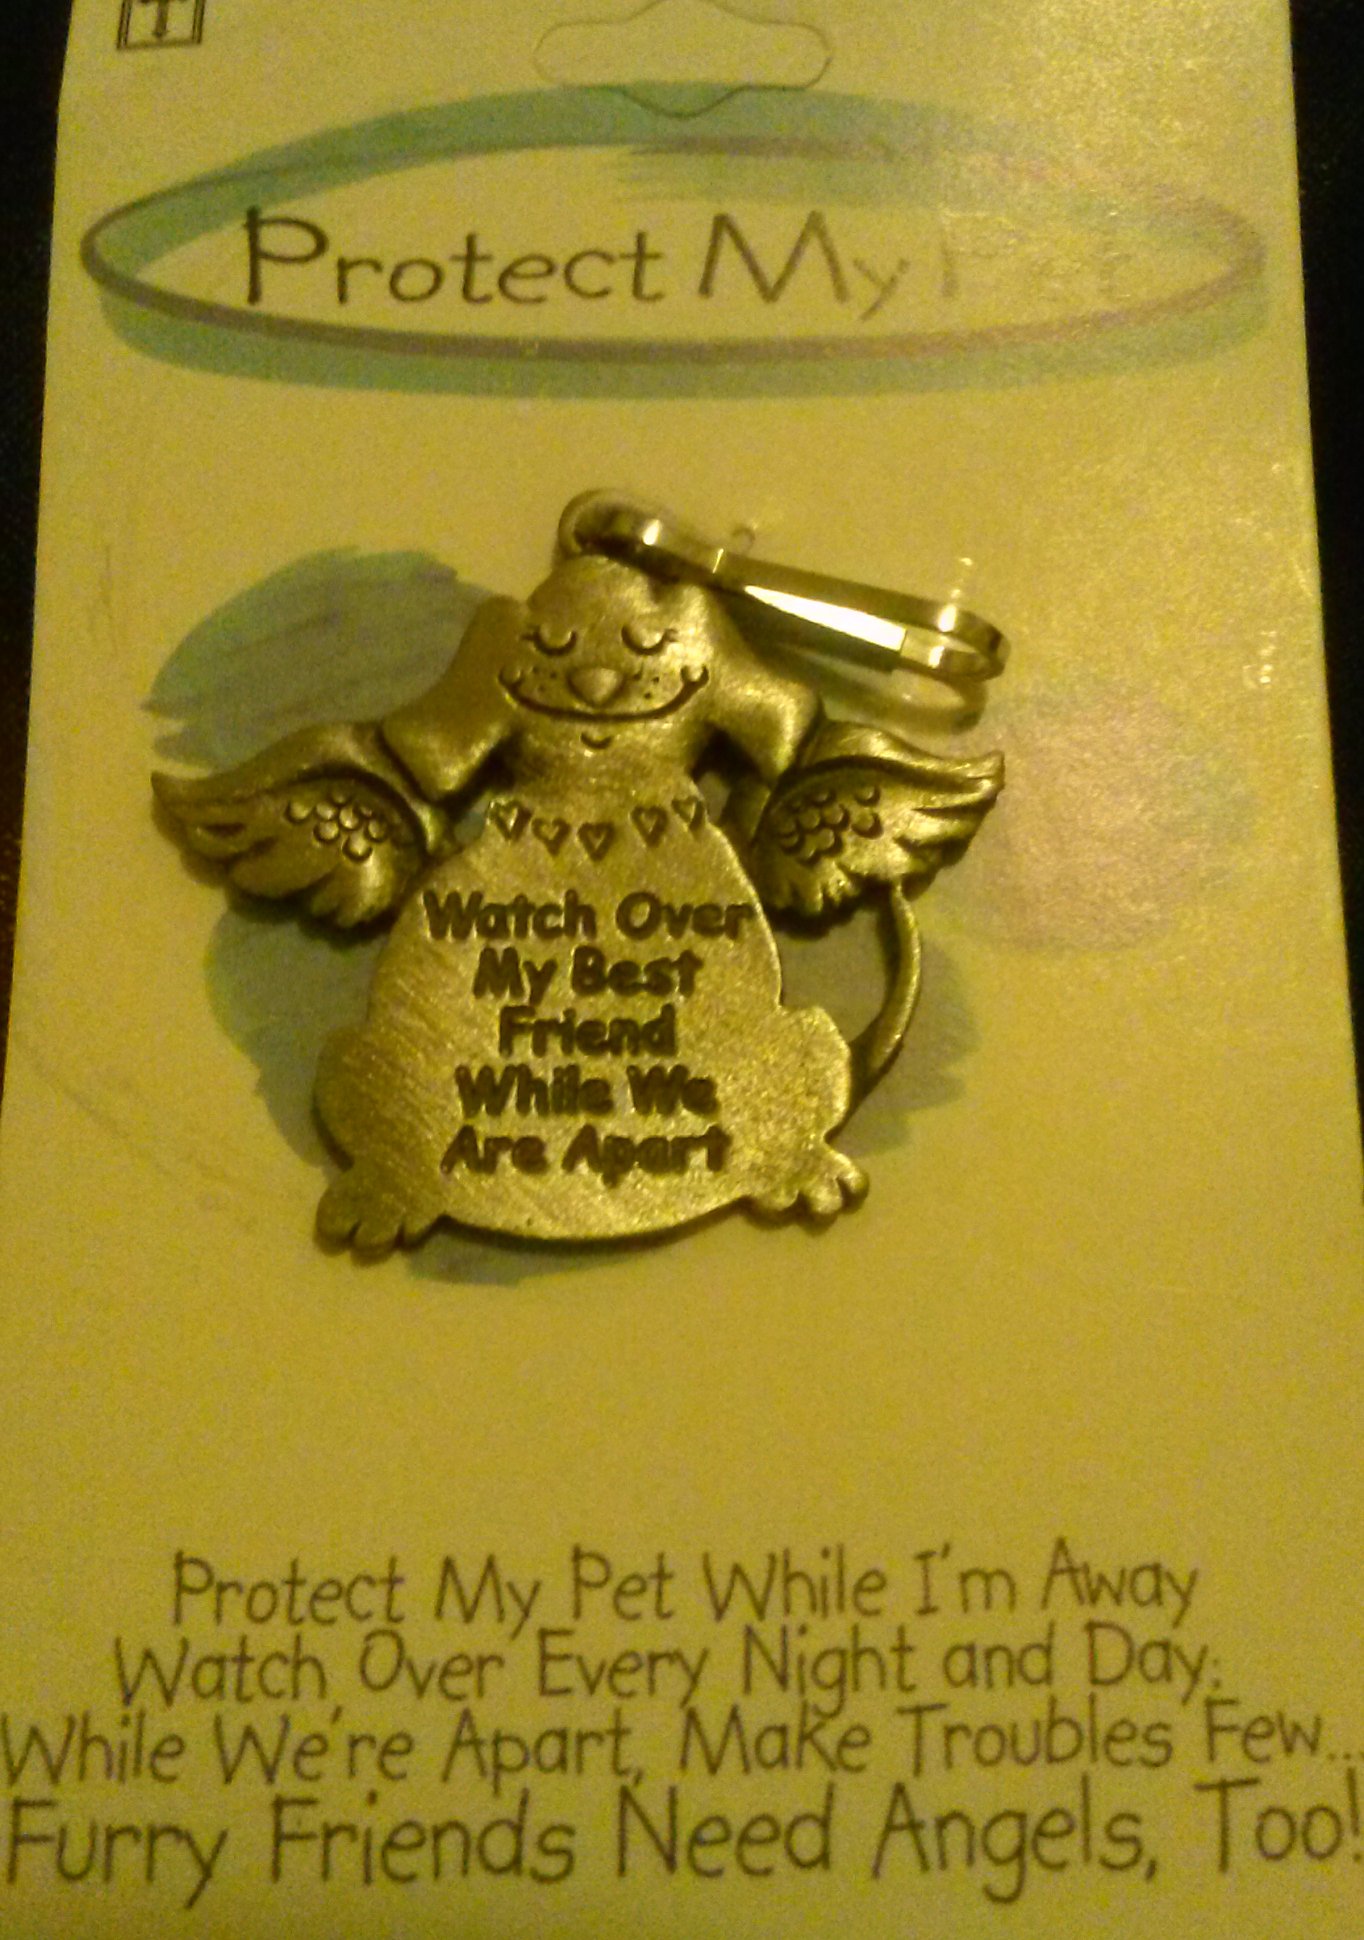 Protect my pet (dog) tag